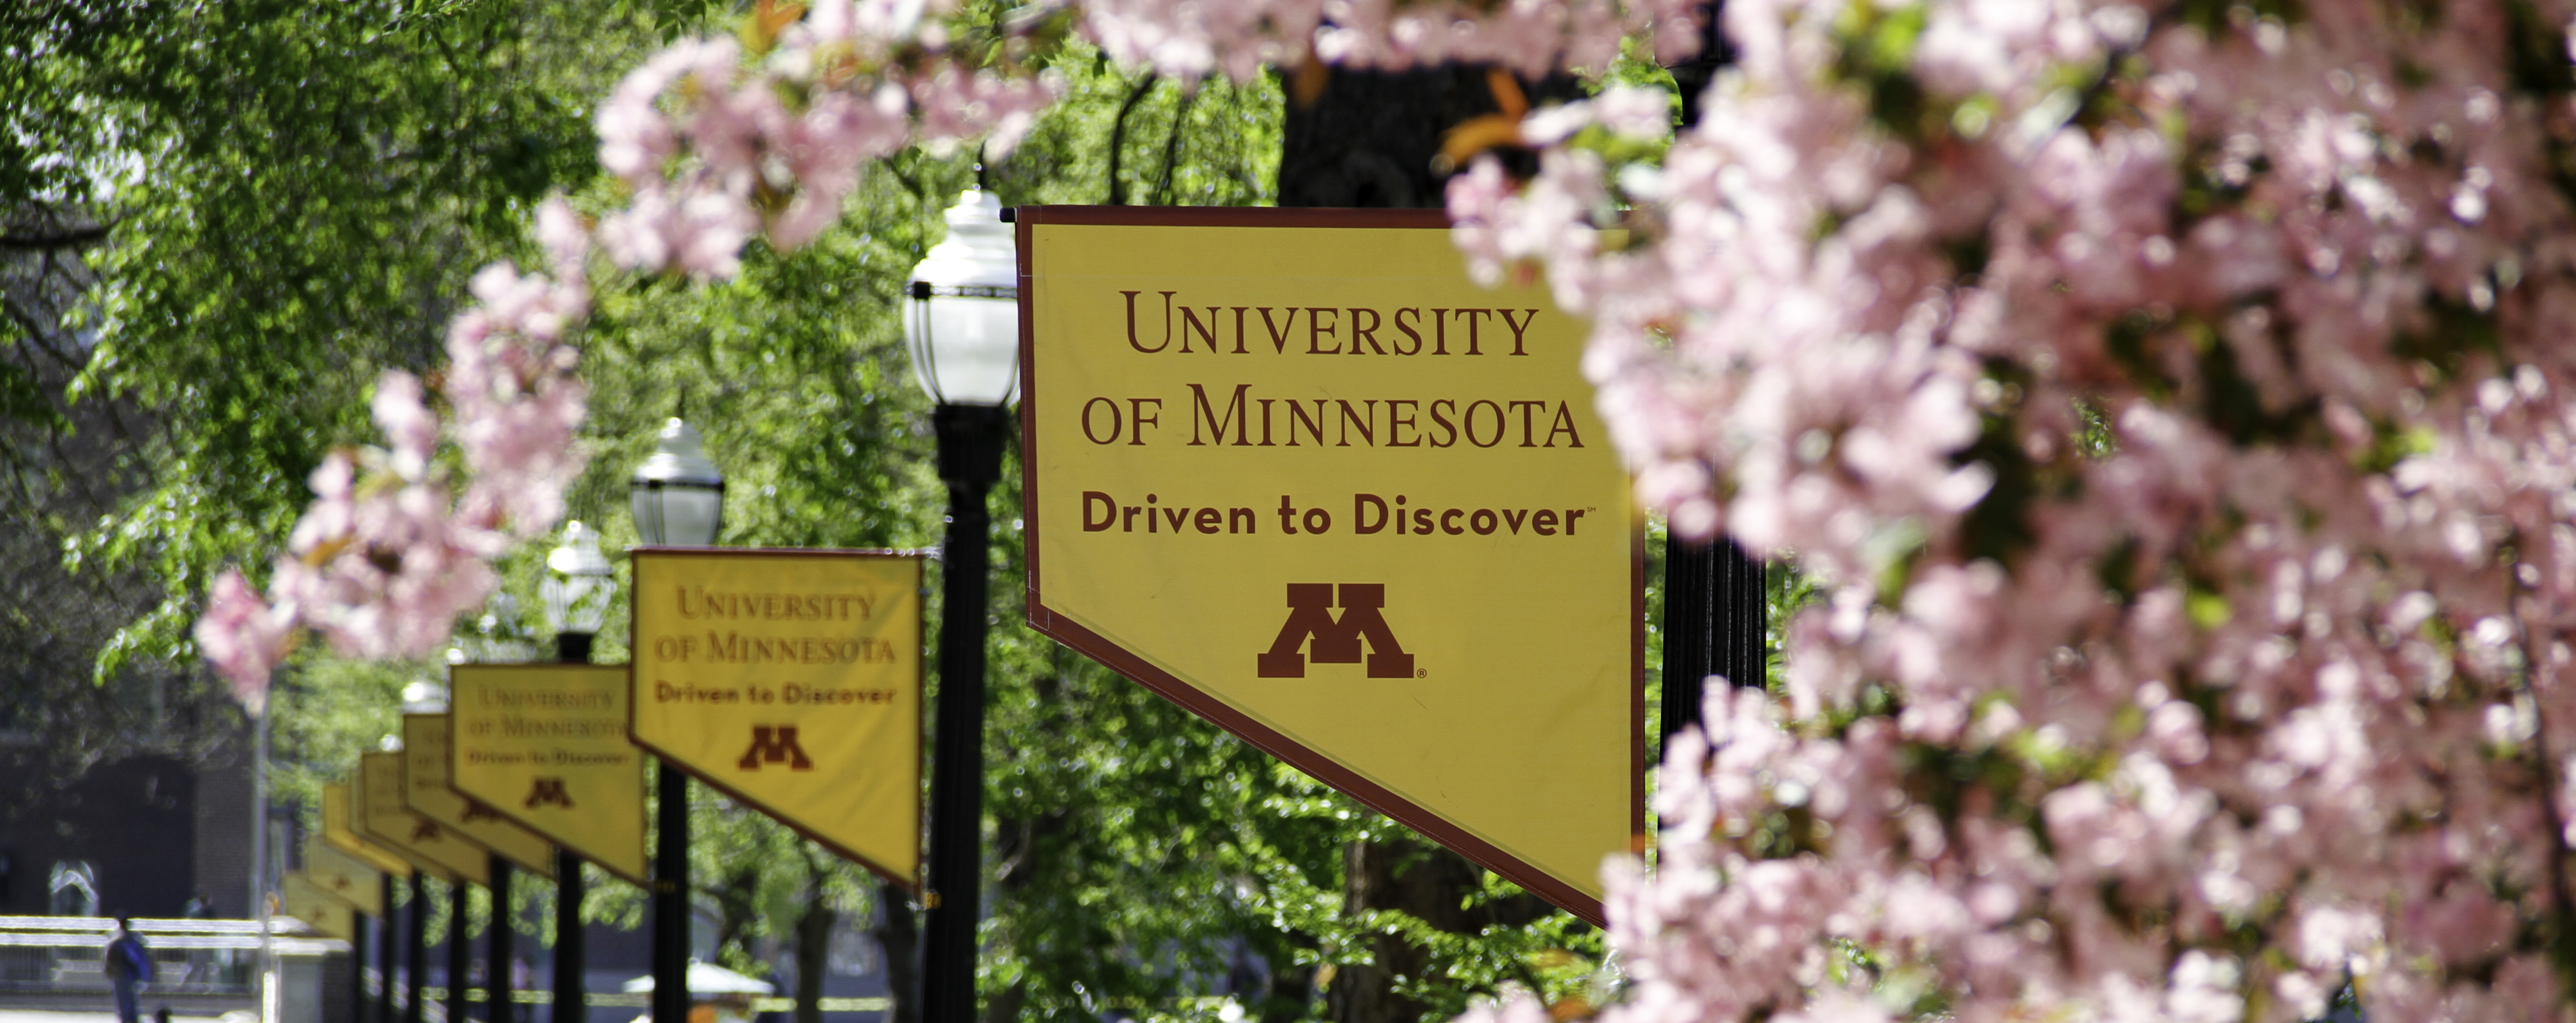 University of Minnesota Banner in flowers image